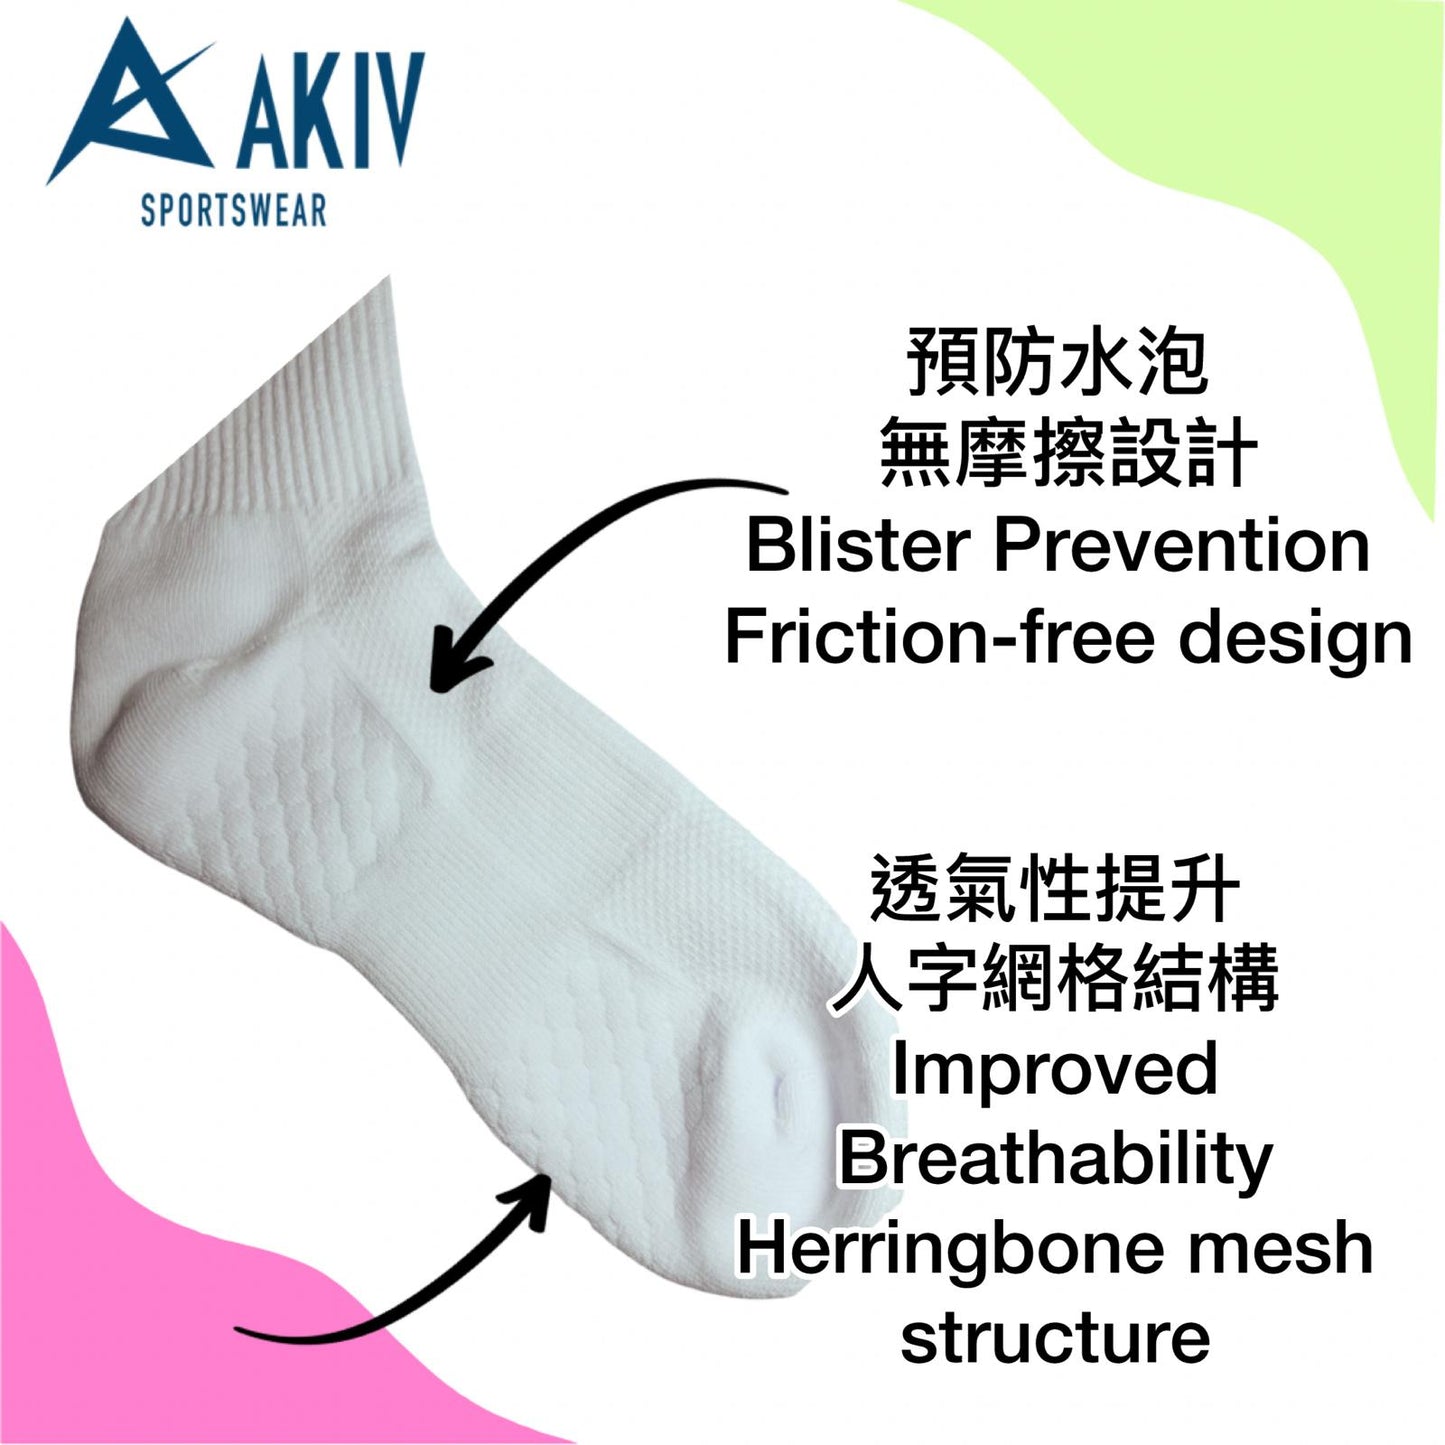 AKIV High-Cut Light Cushion Running Socks (Unisex, Free Size)